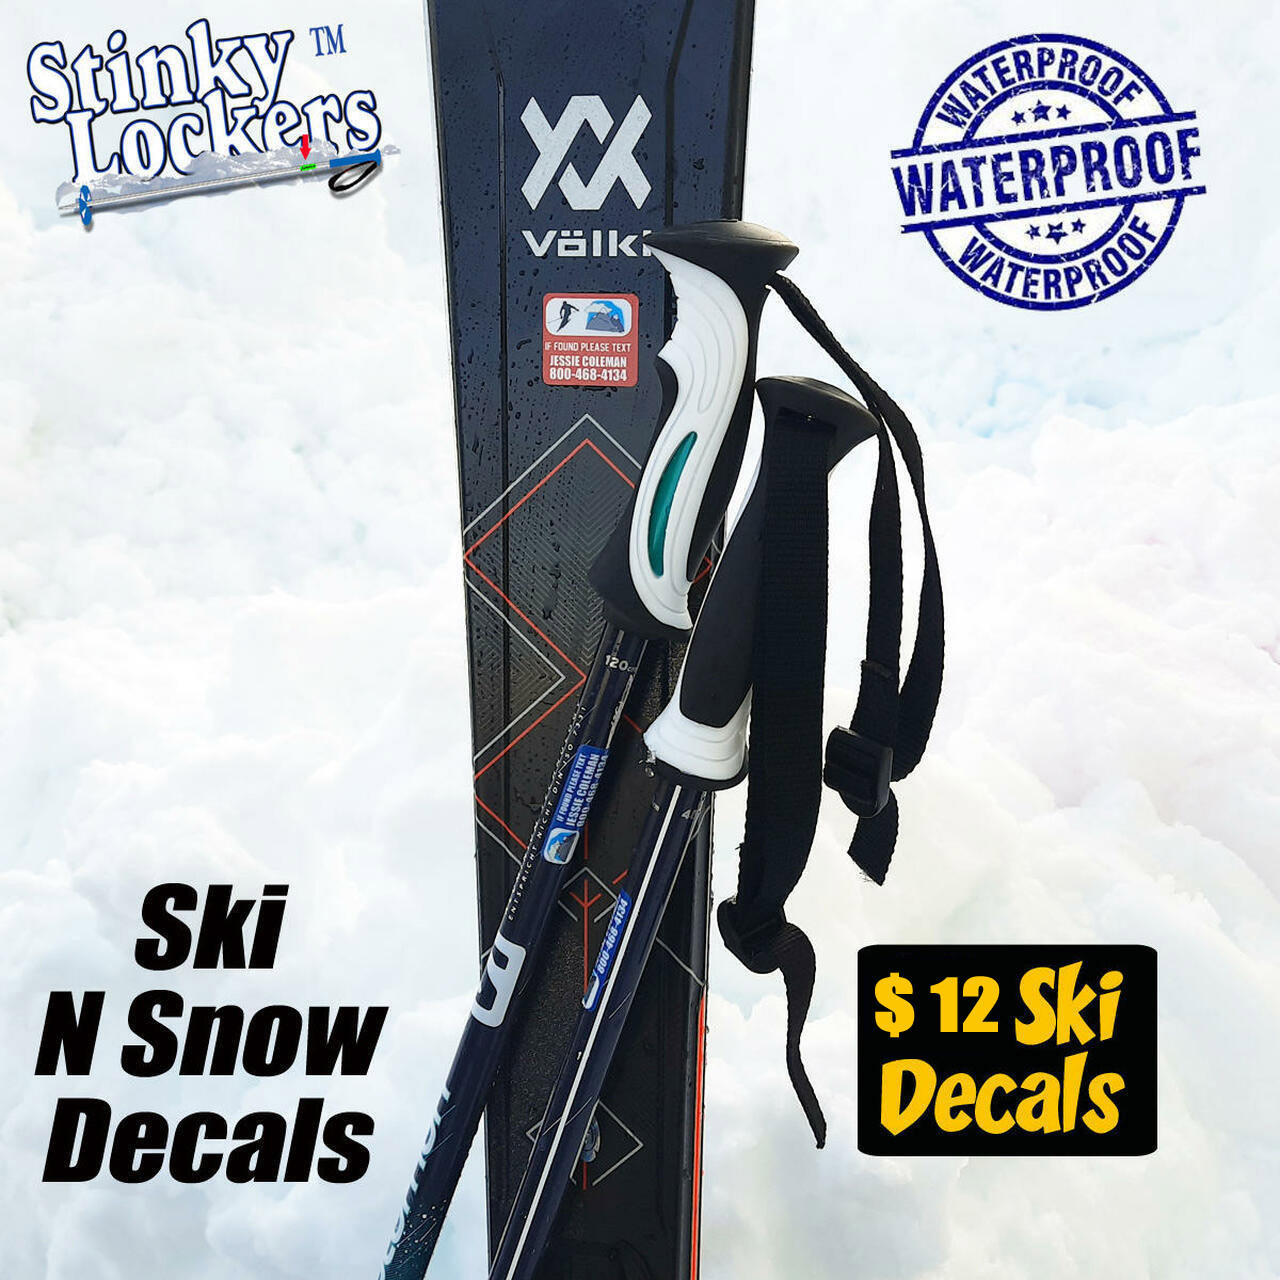 How to label ski equipment